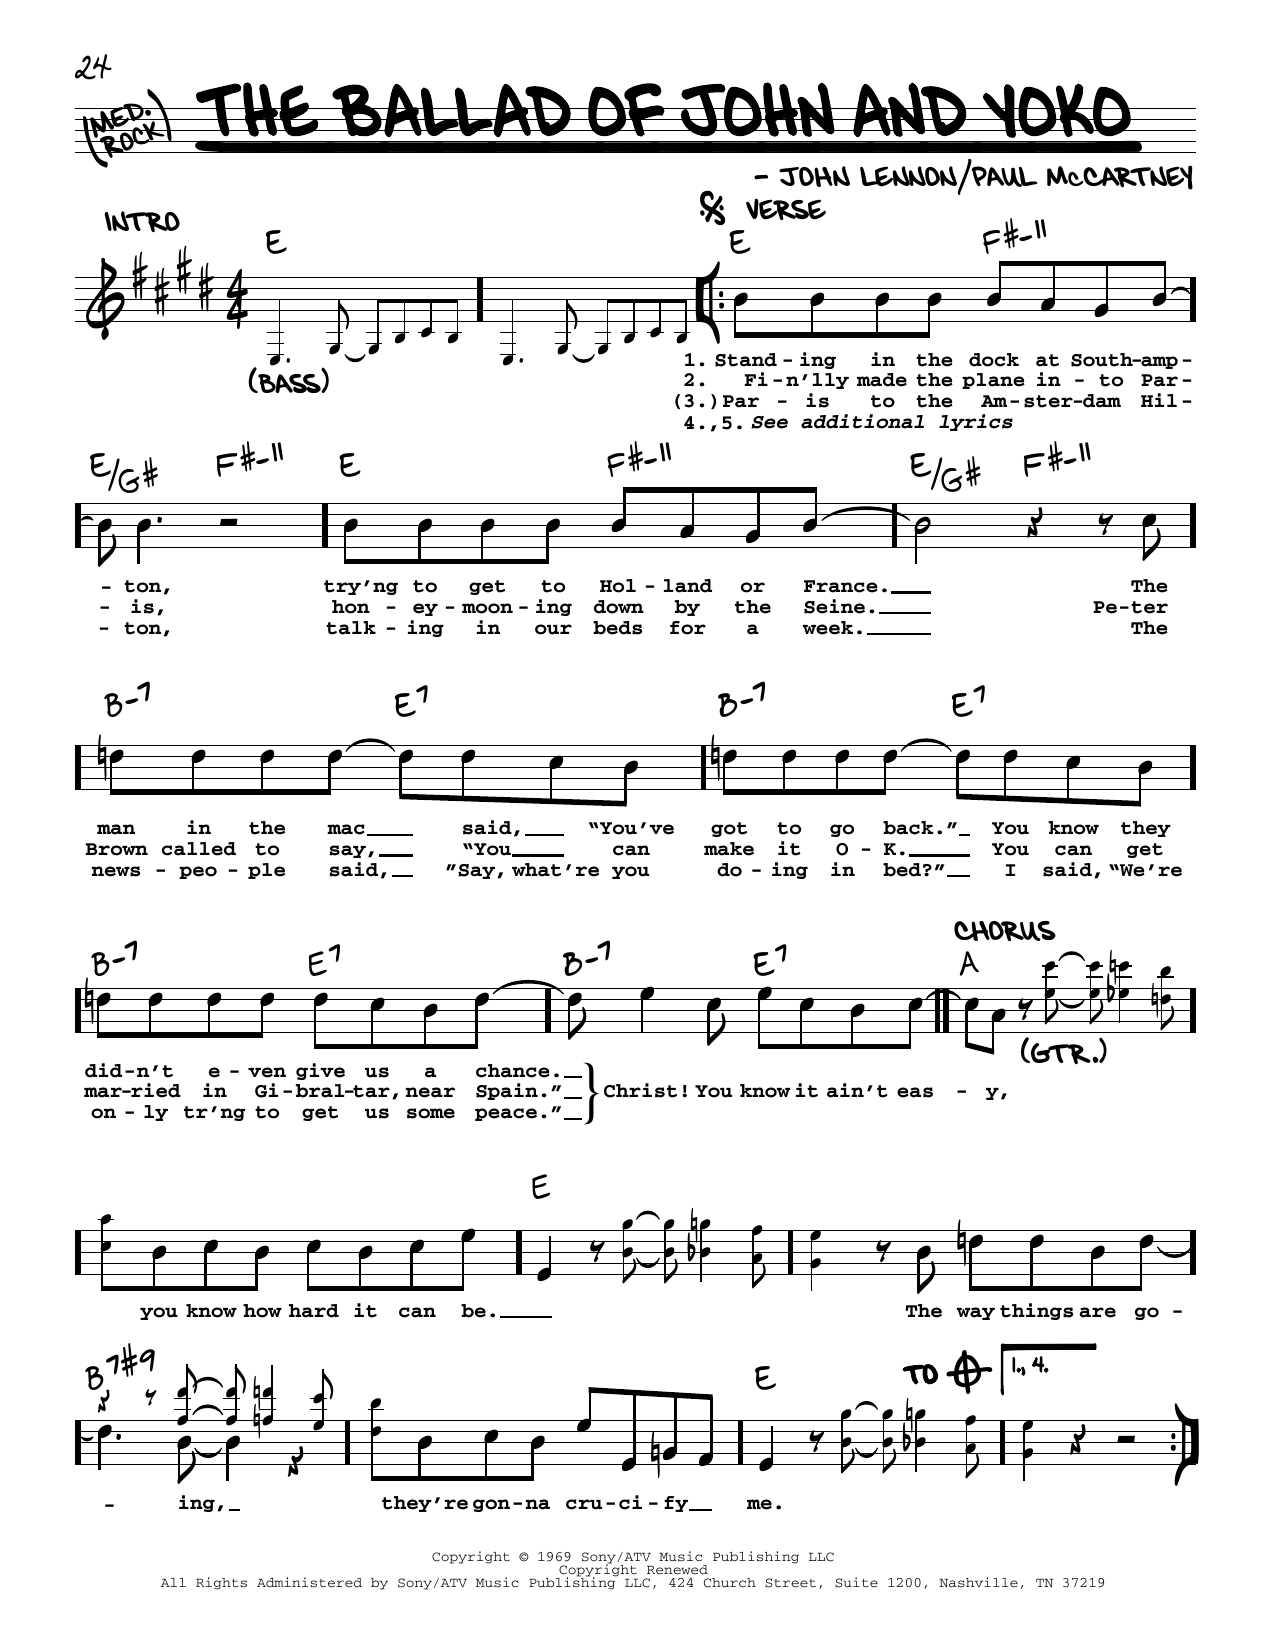 The Beatles The Ballad Of John And Yoko [Jazz version] Sheet Music Notes & Chords for Real Book – Melody, Lyrics & Chords - Download or Print PDF